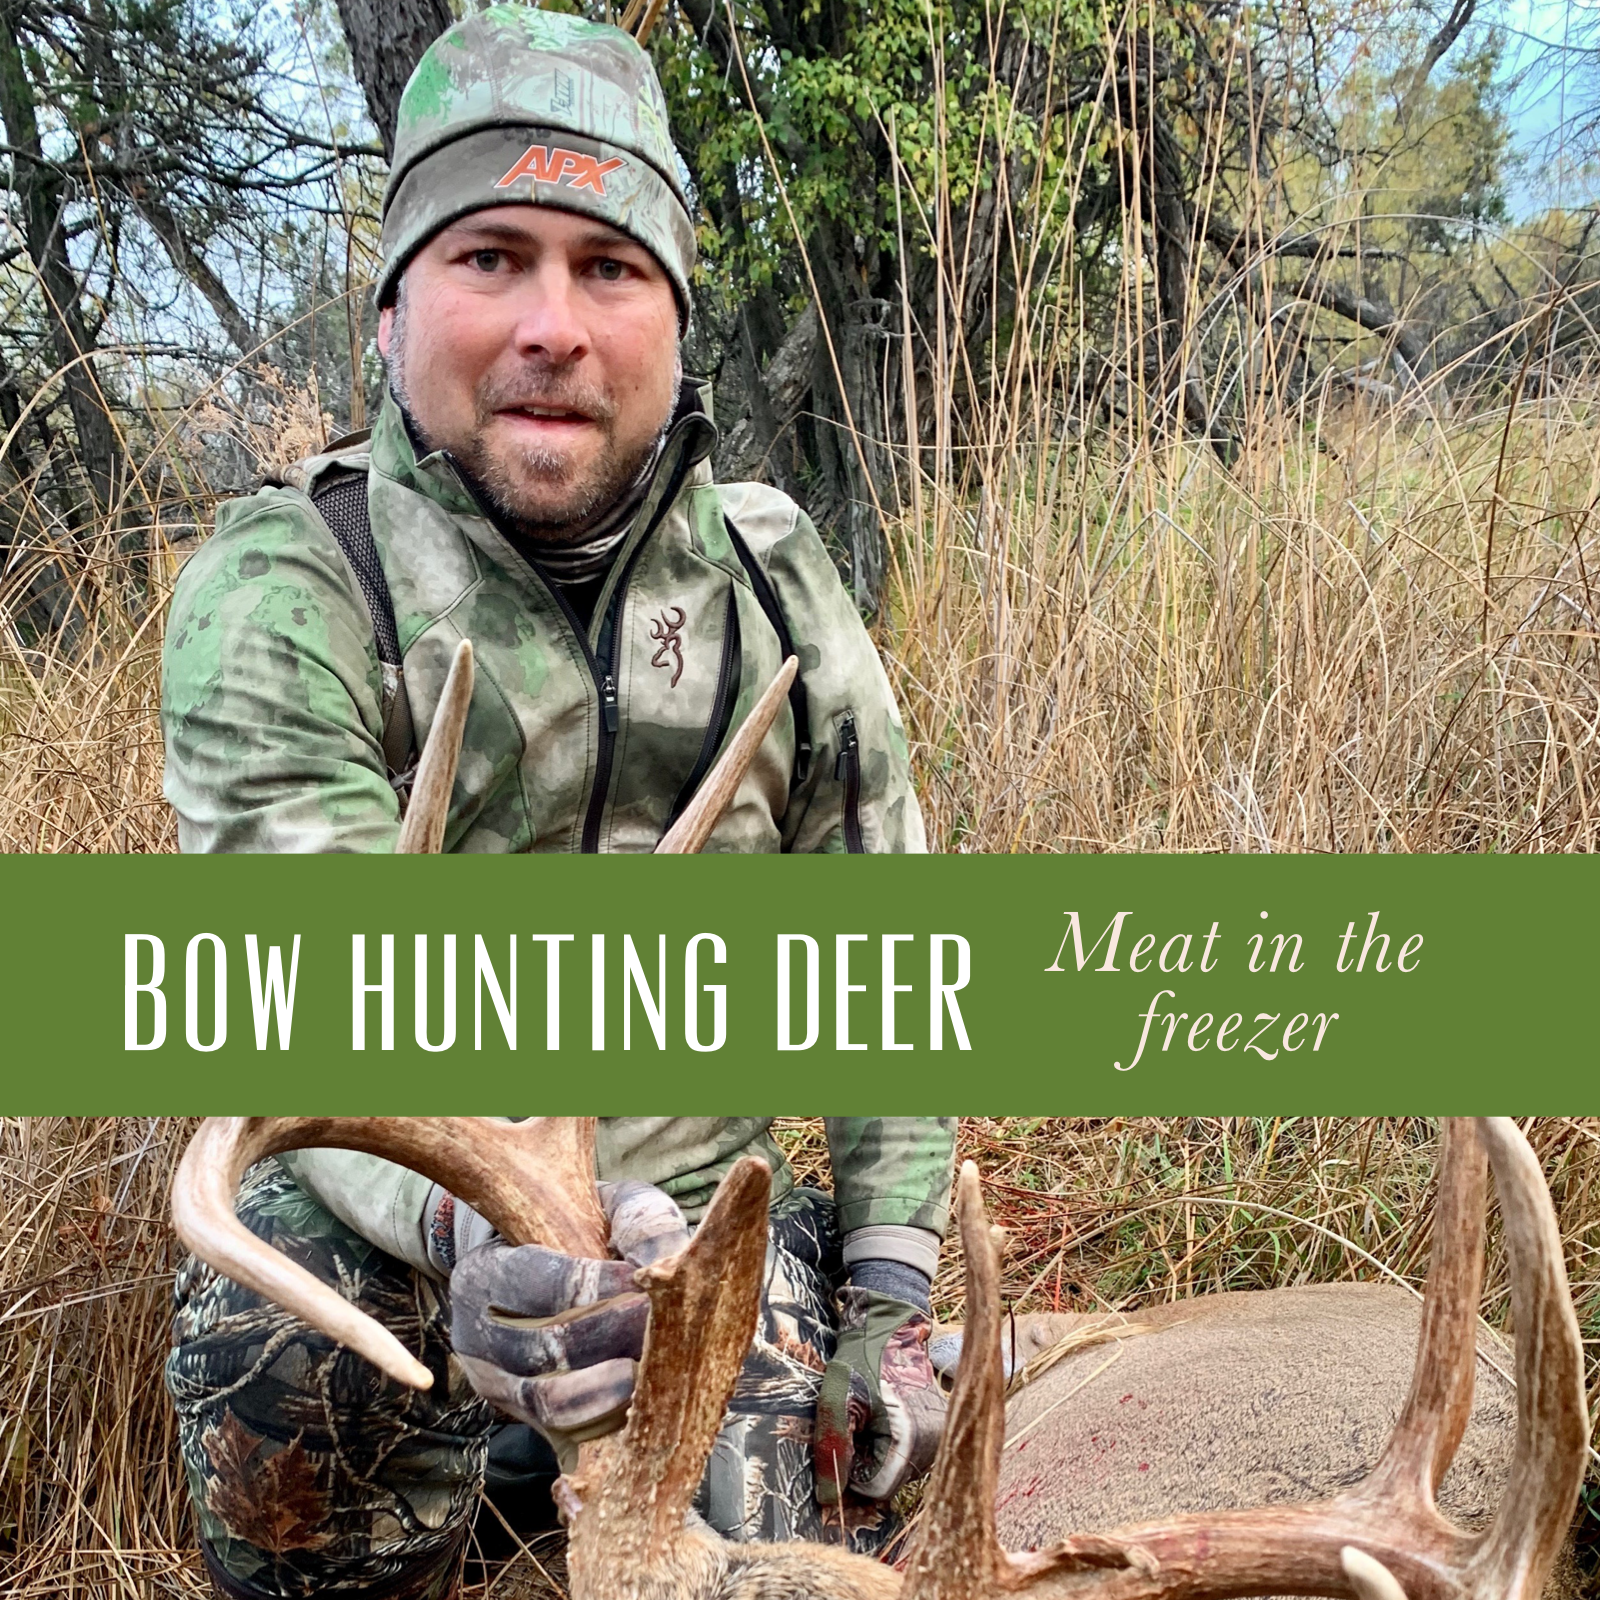 My husband bow hunting deer